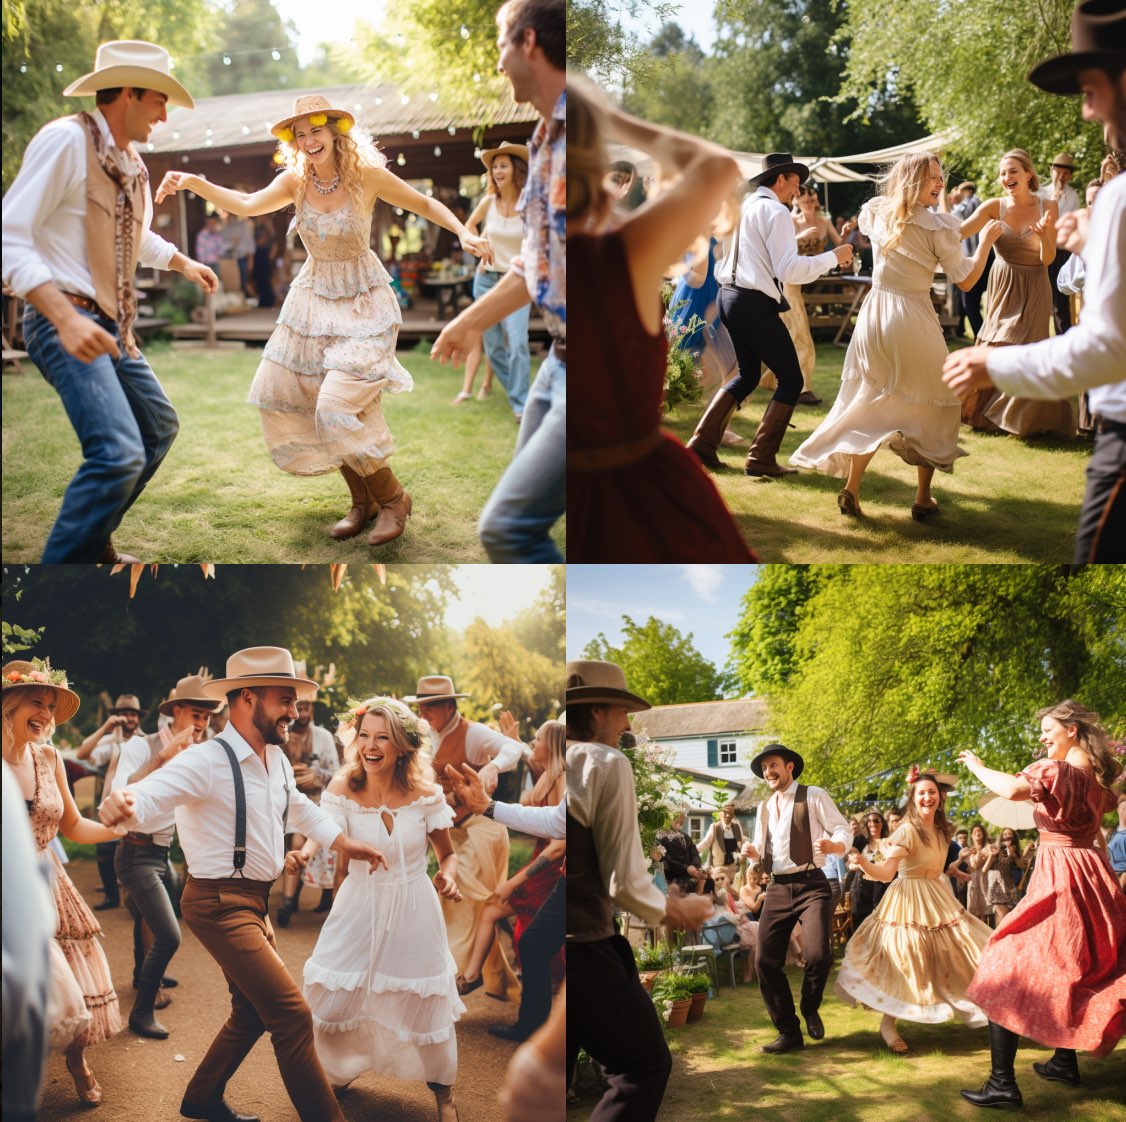 people dancing, suburban garden party, wild west theme. KI-Prompt Inspiration: Theme